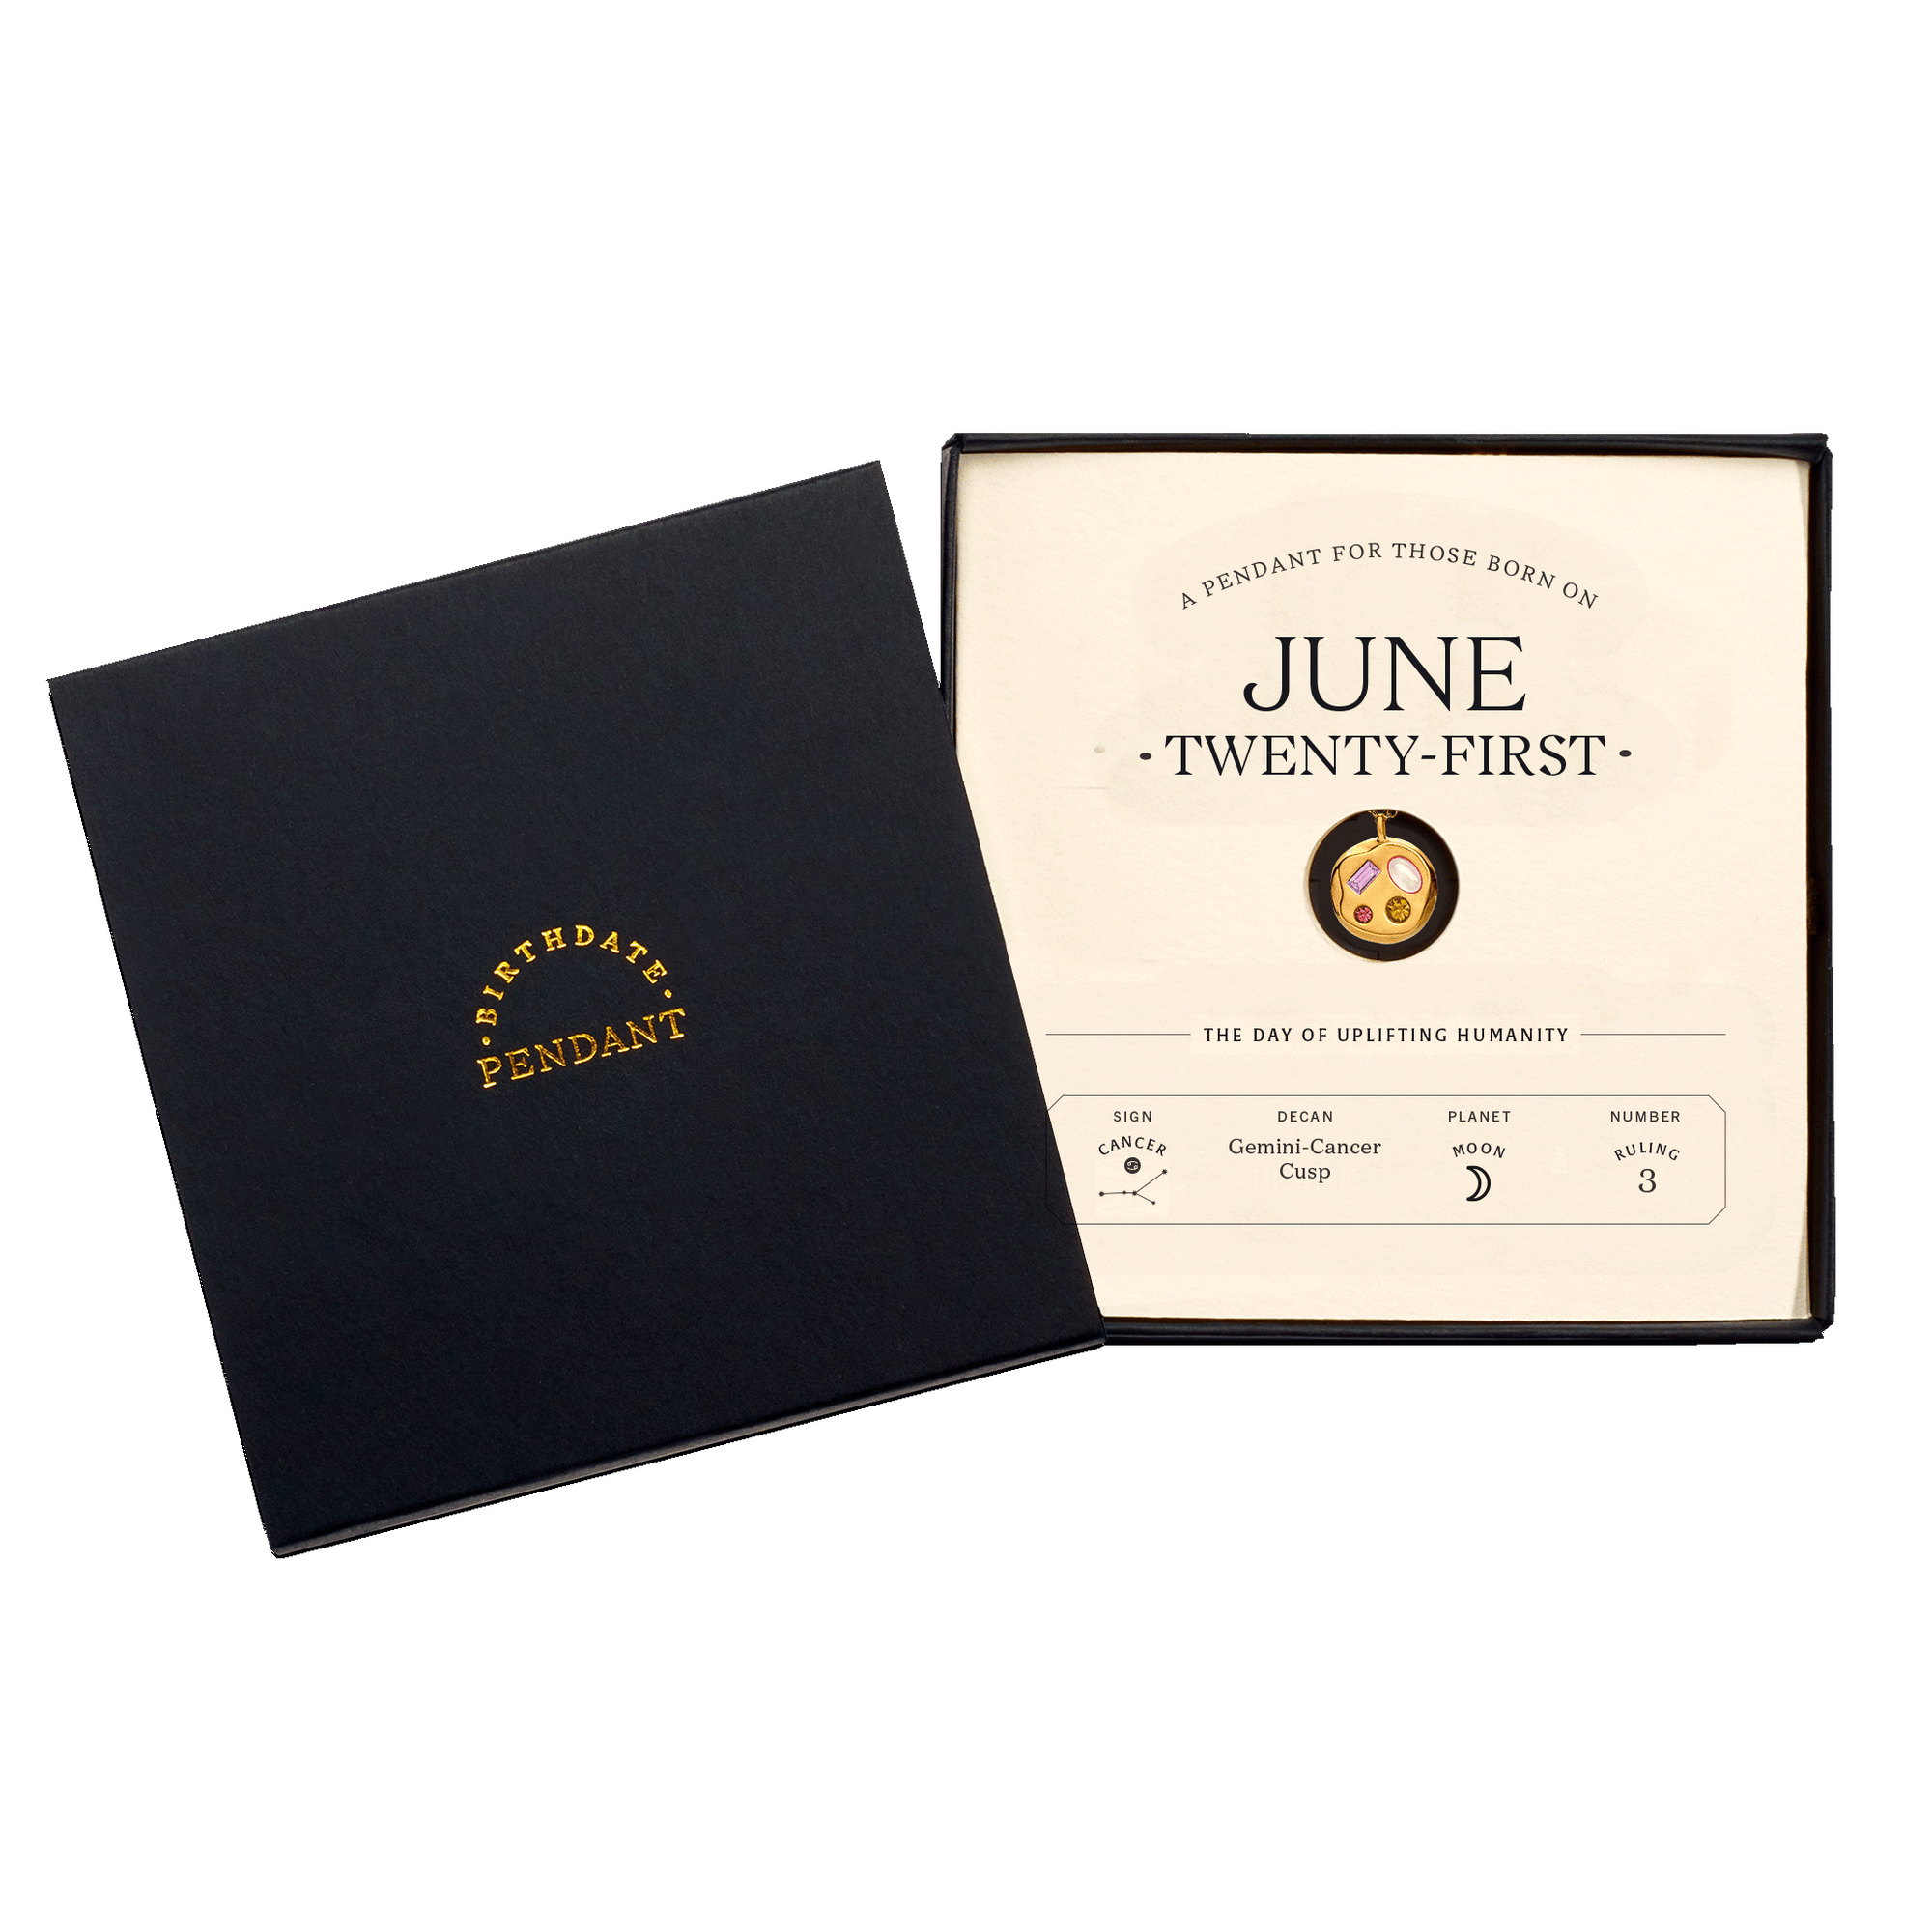 The June Twenty-First Pendant inside its box